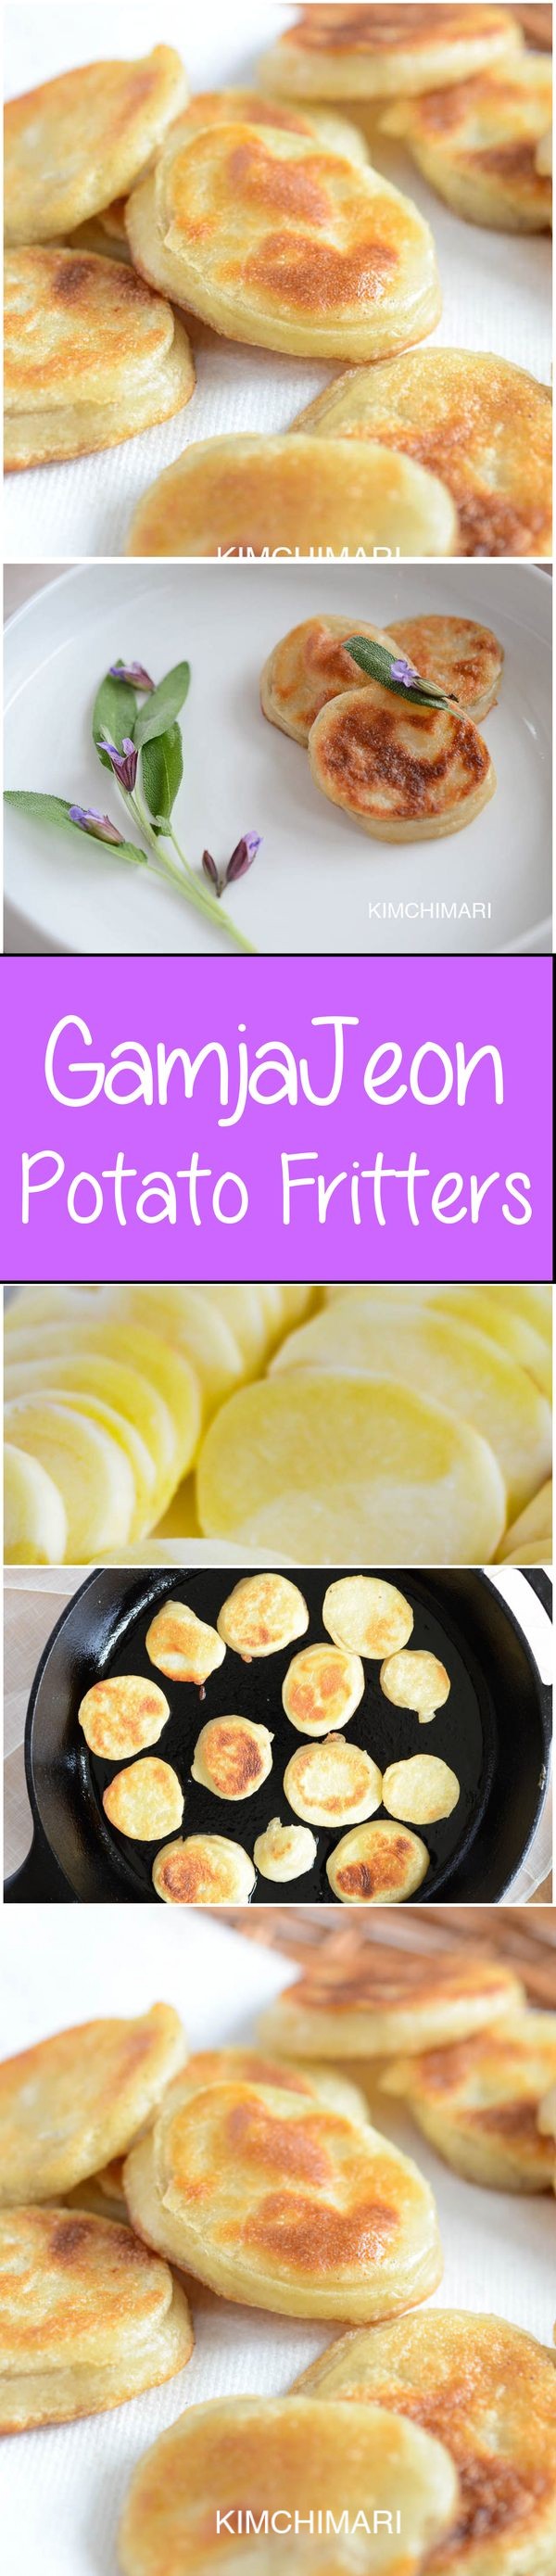 Korean Potato Fritters (Gamjajeon